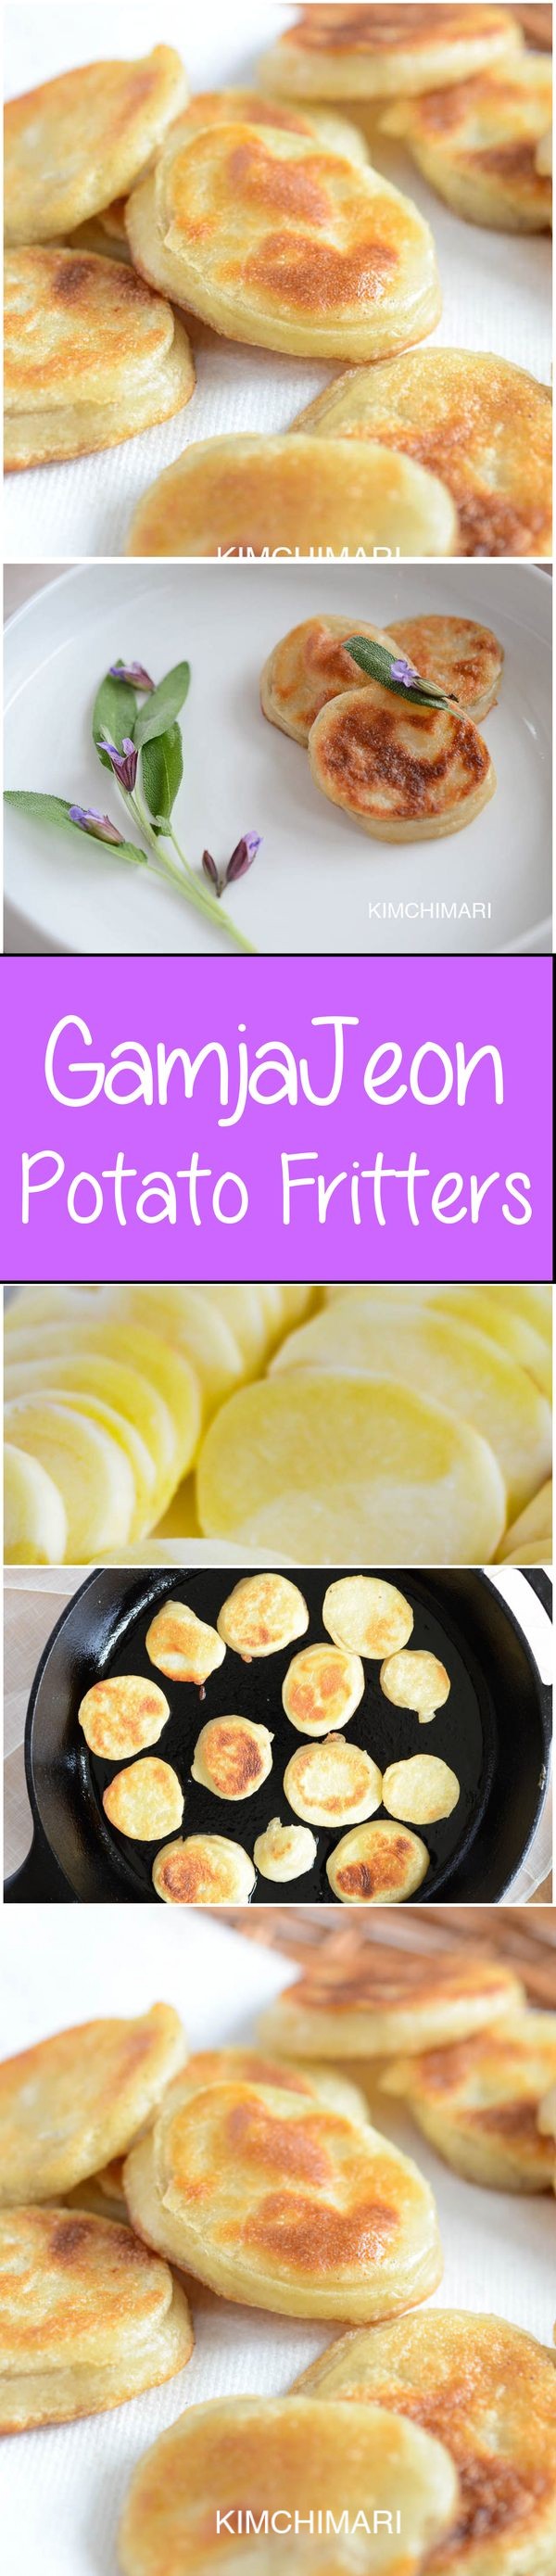 Korean Potato Fritters (Gamjajeon